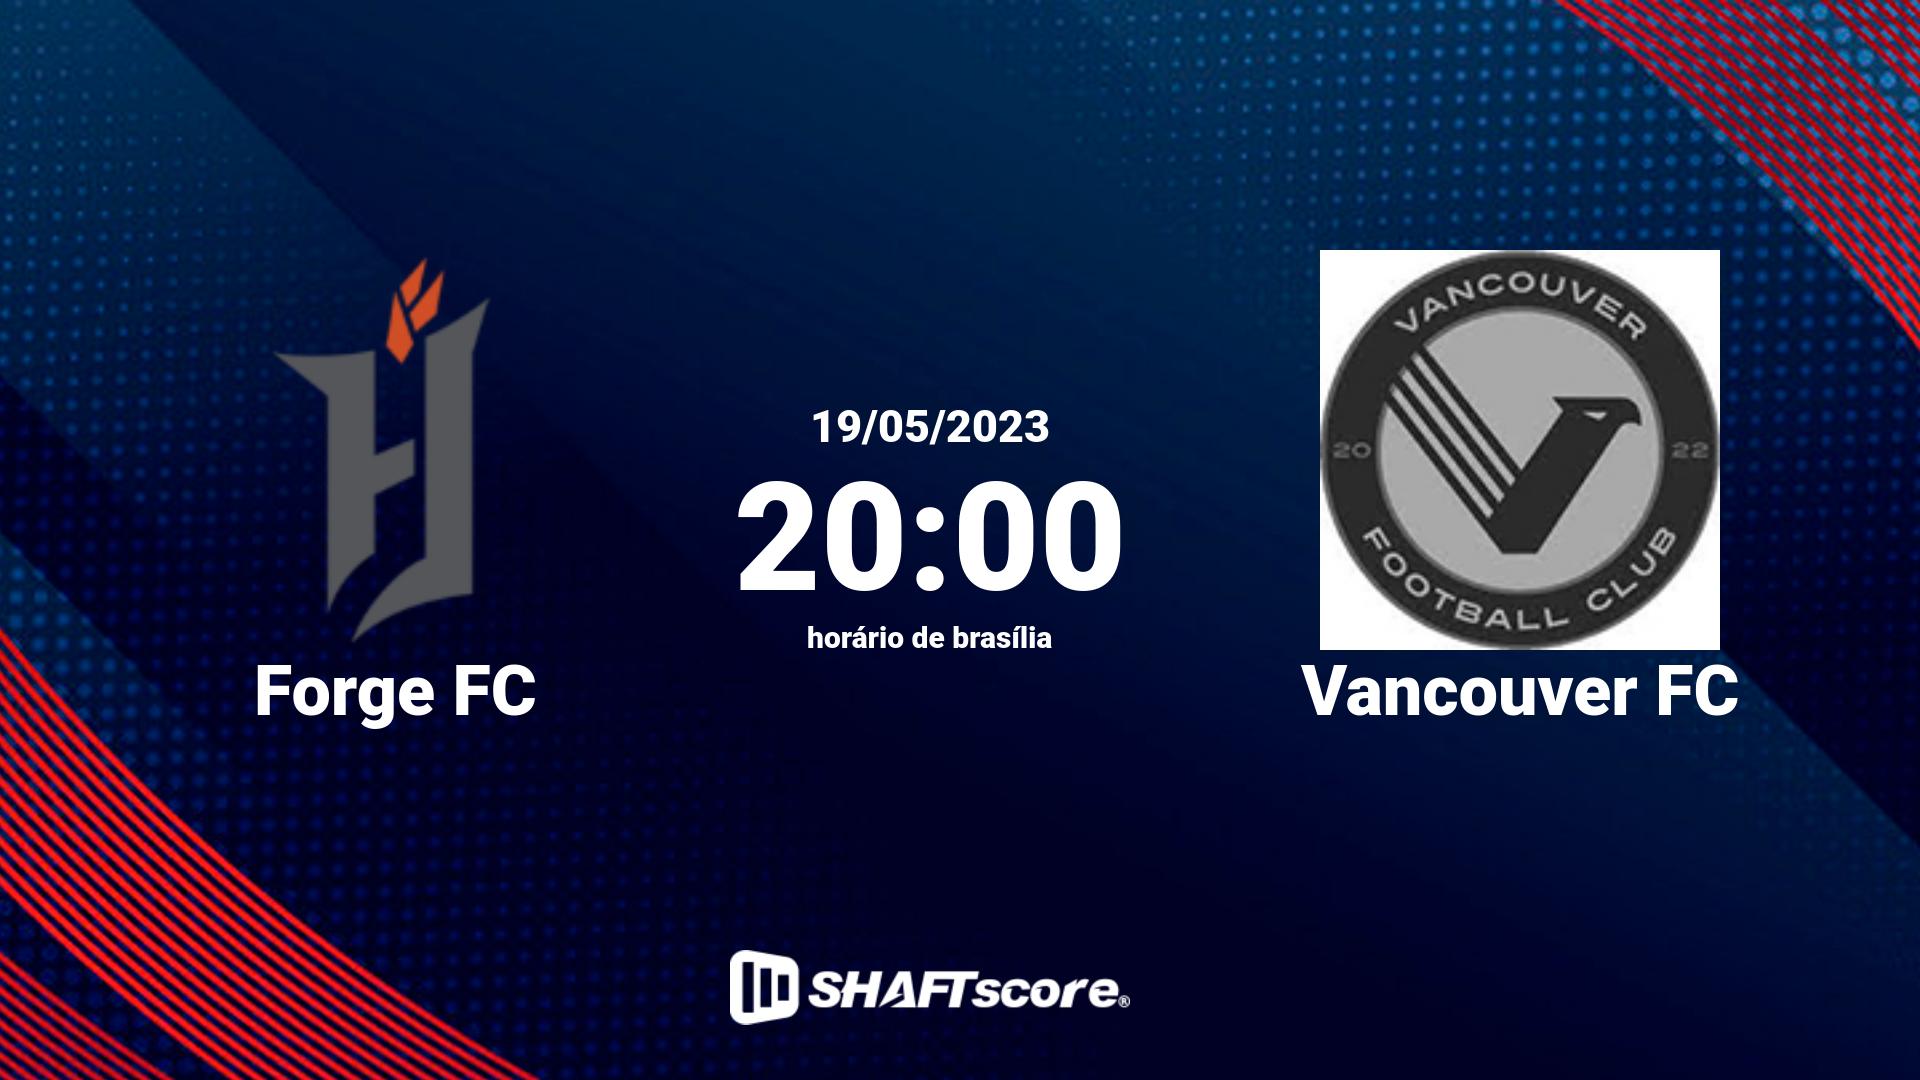 Estatísticas do jogo Forge FC vs Vancouver FC 19.05 20:00